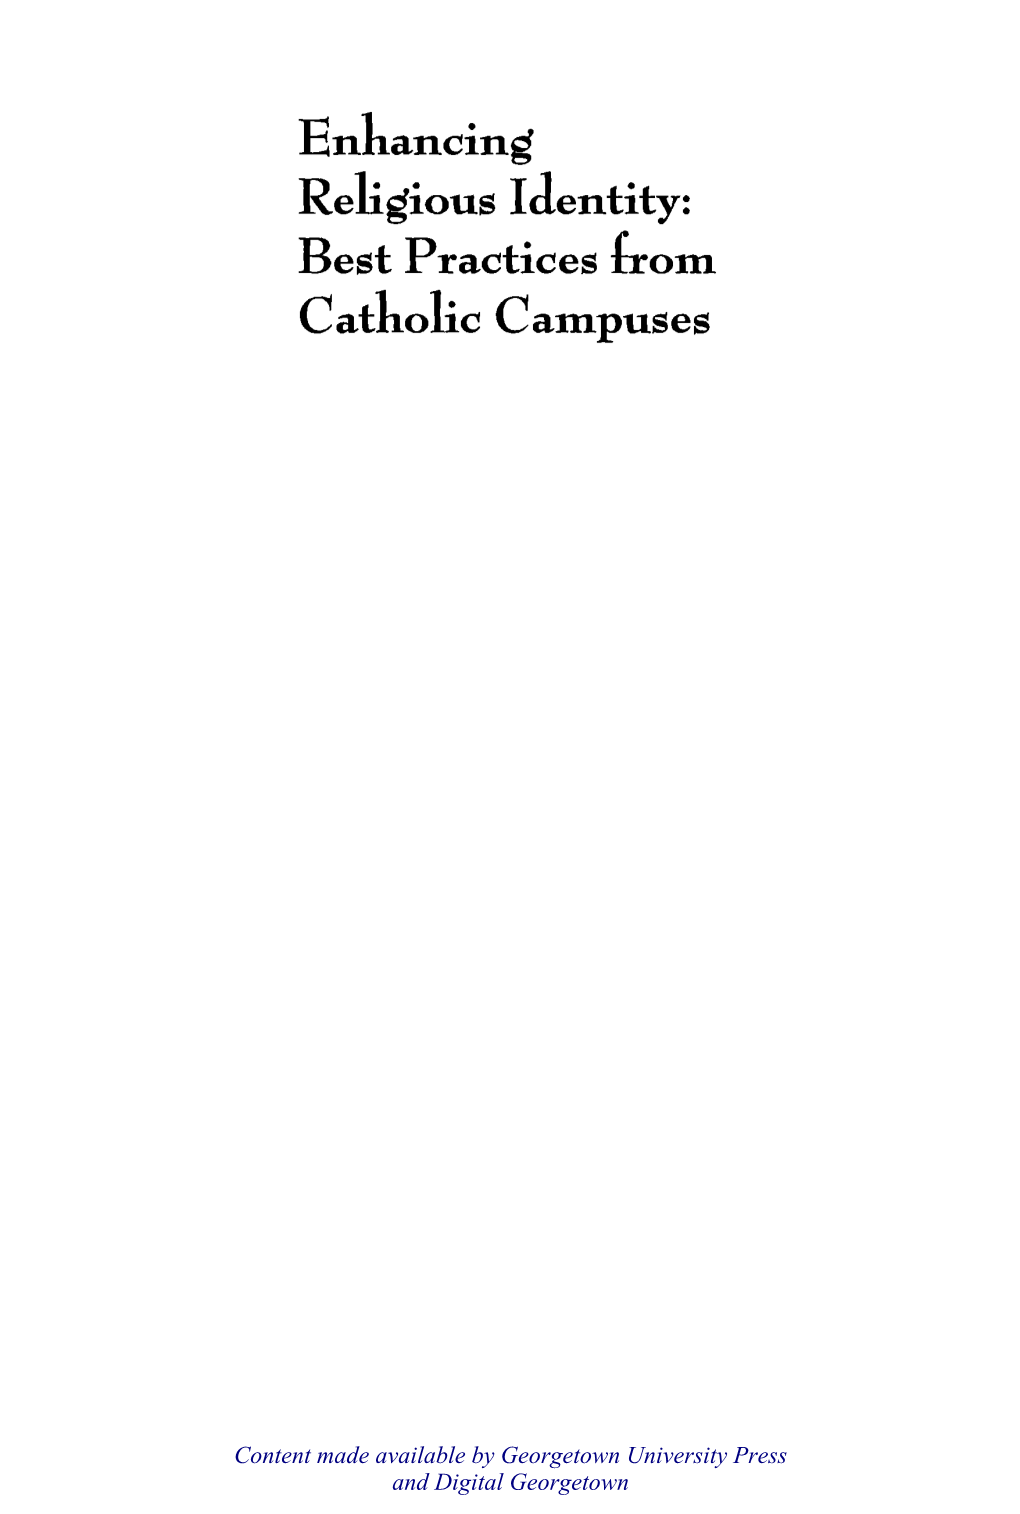 Enhancing Religious Identity: Best Practices Rrom Catnolic Campuses